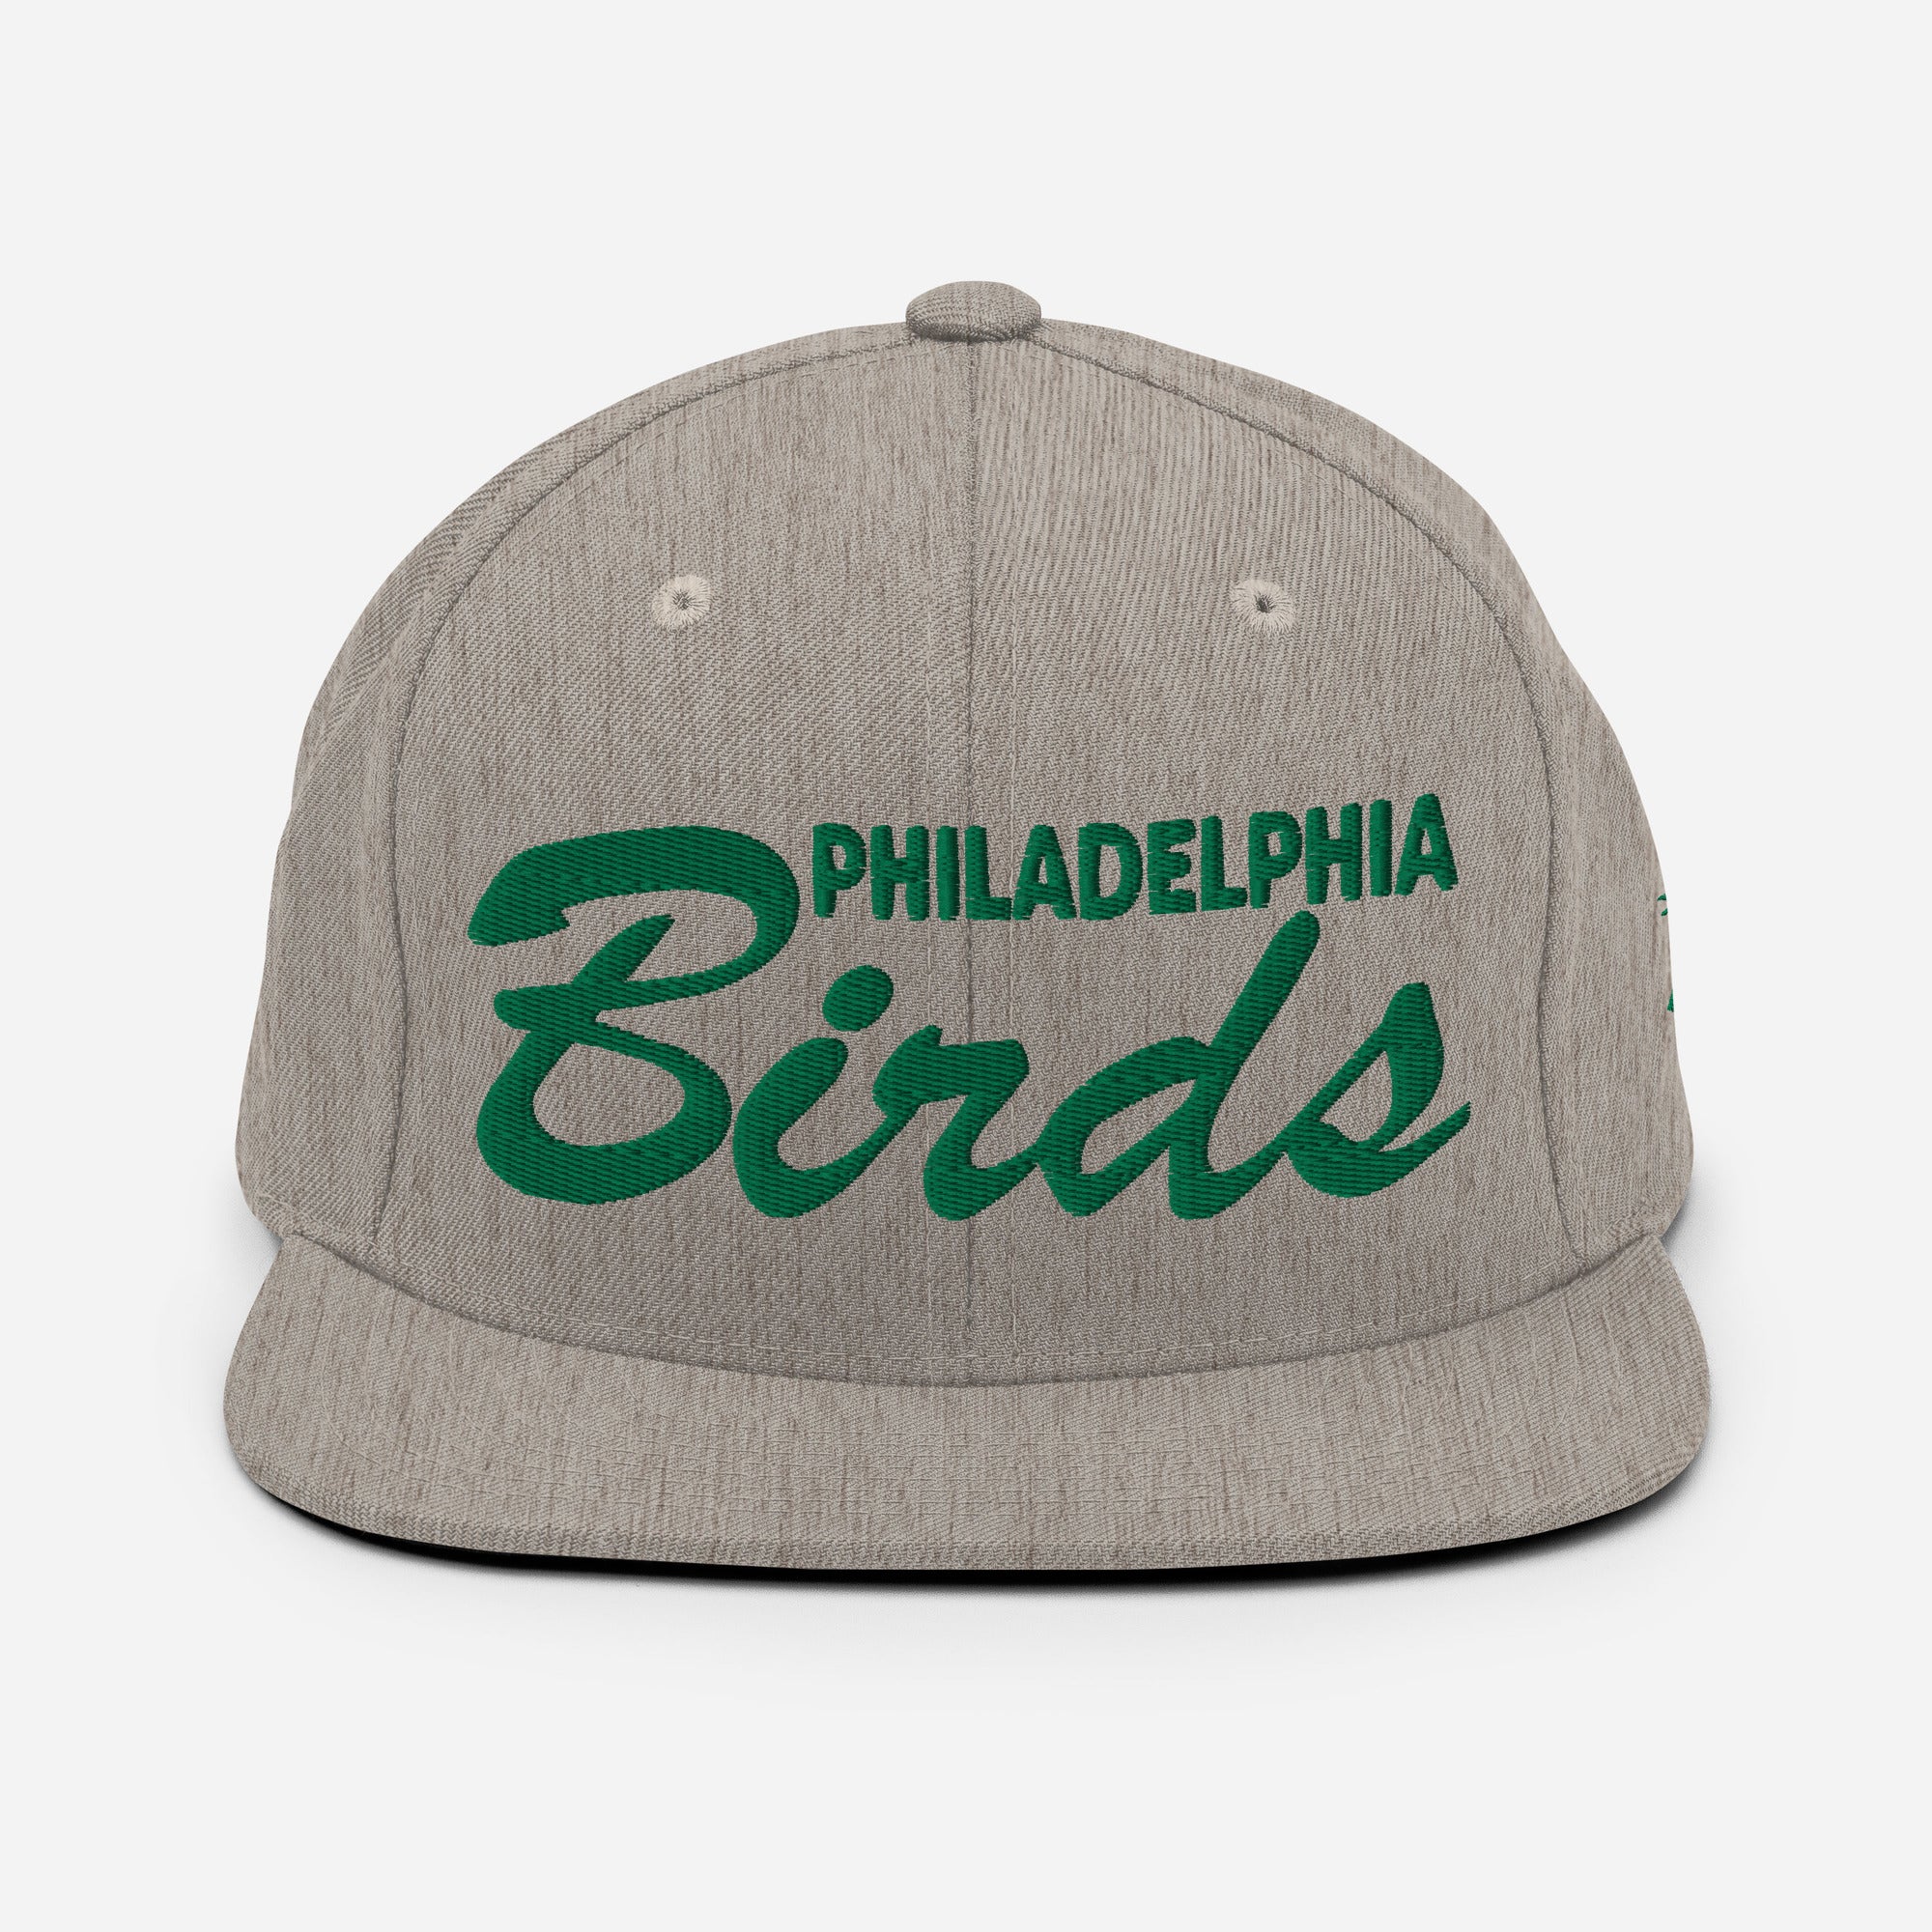 "Philadelphia Birds" Snapback Hat